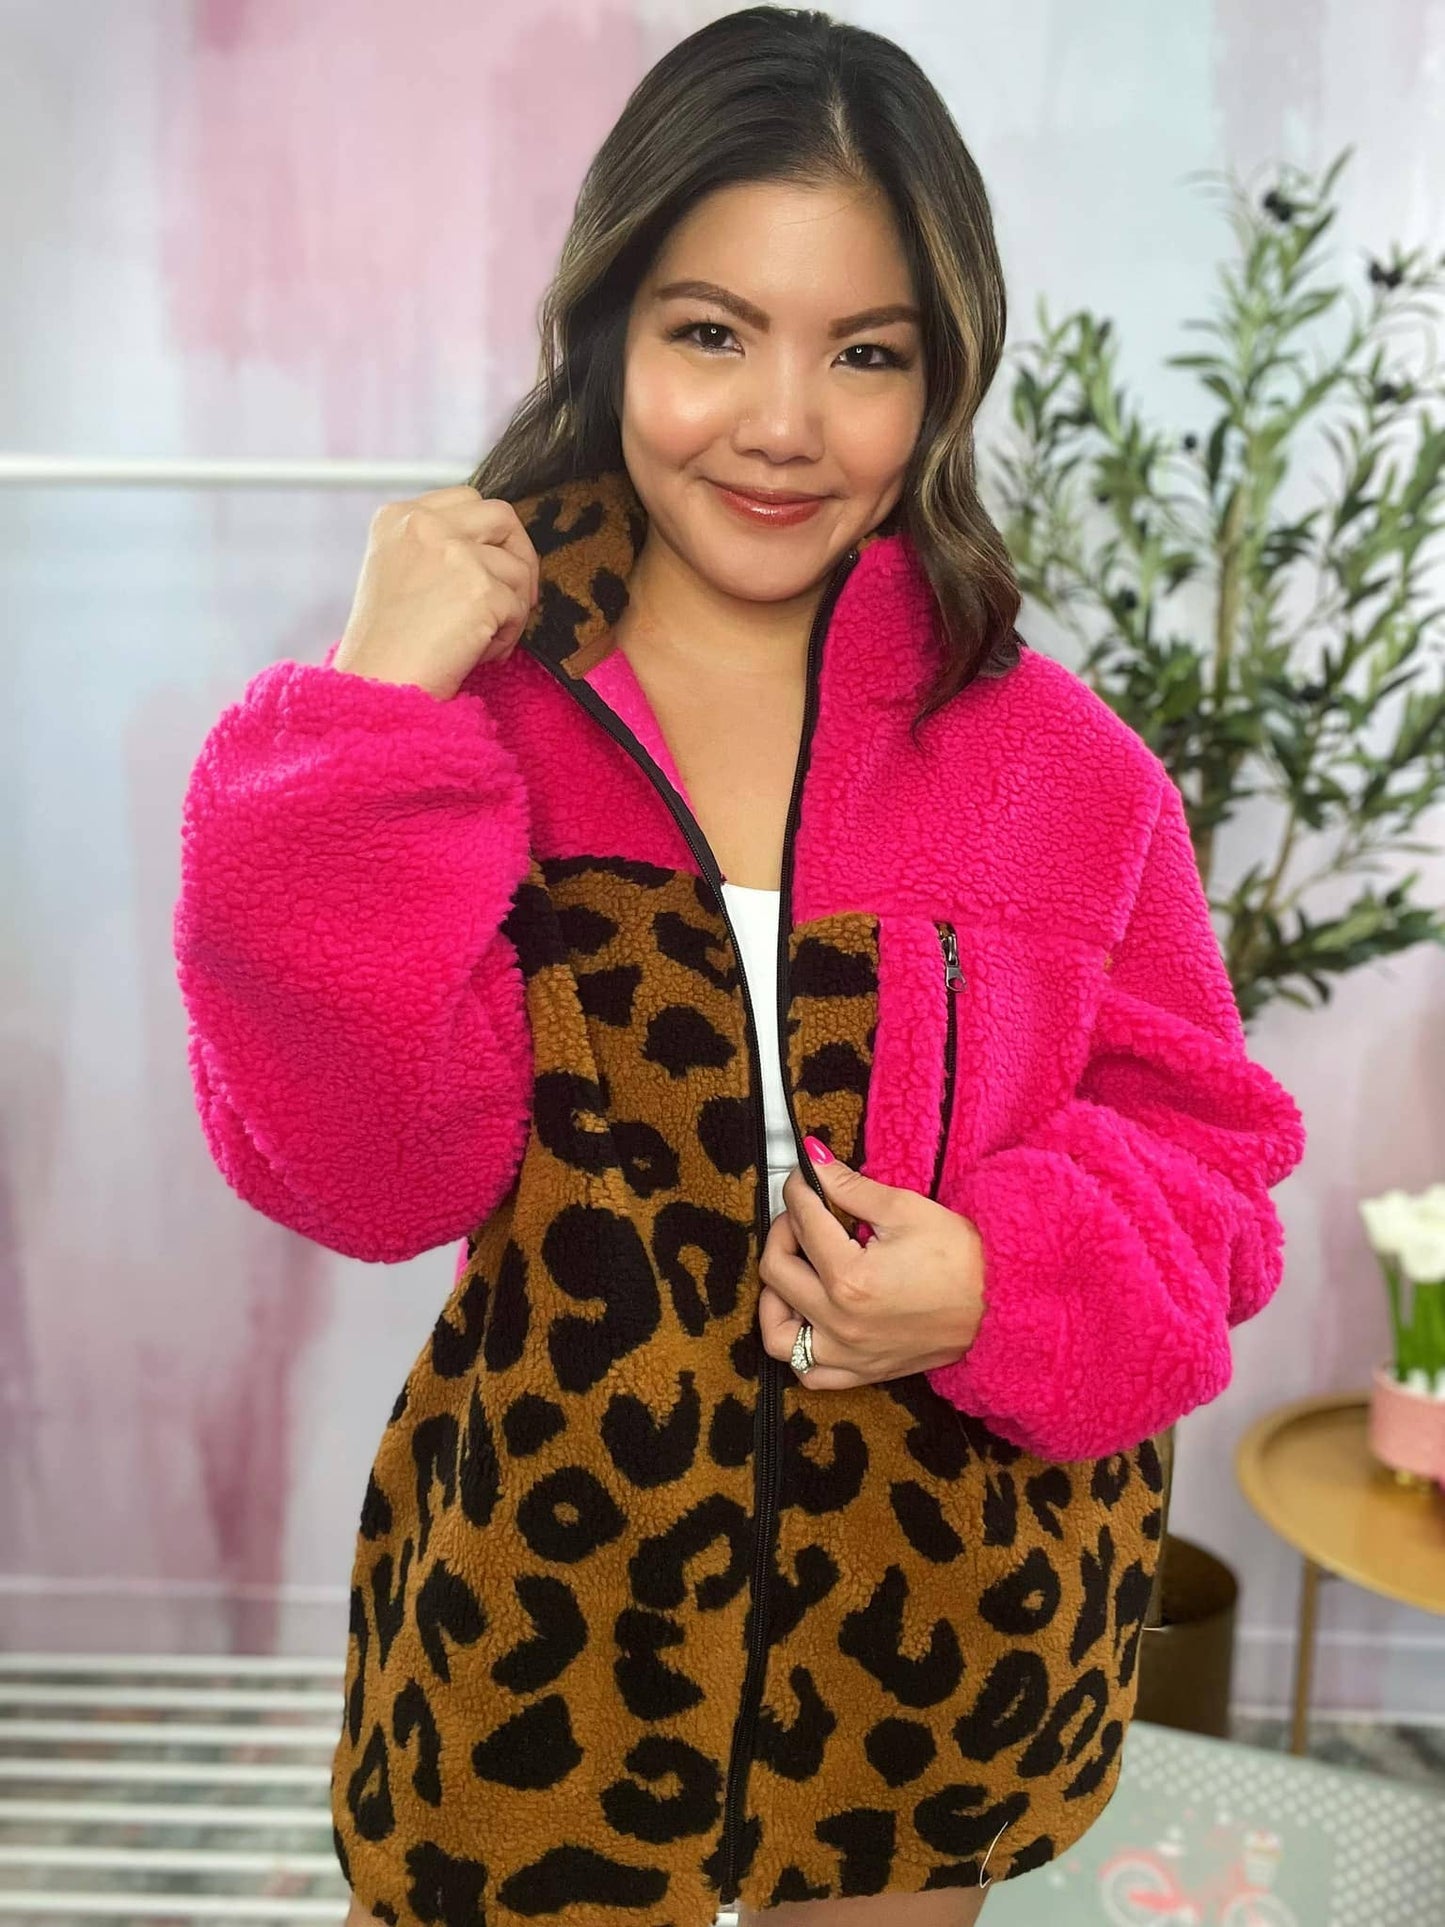 Tori Bright Pink Leopard Zip-up